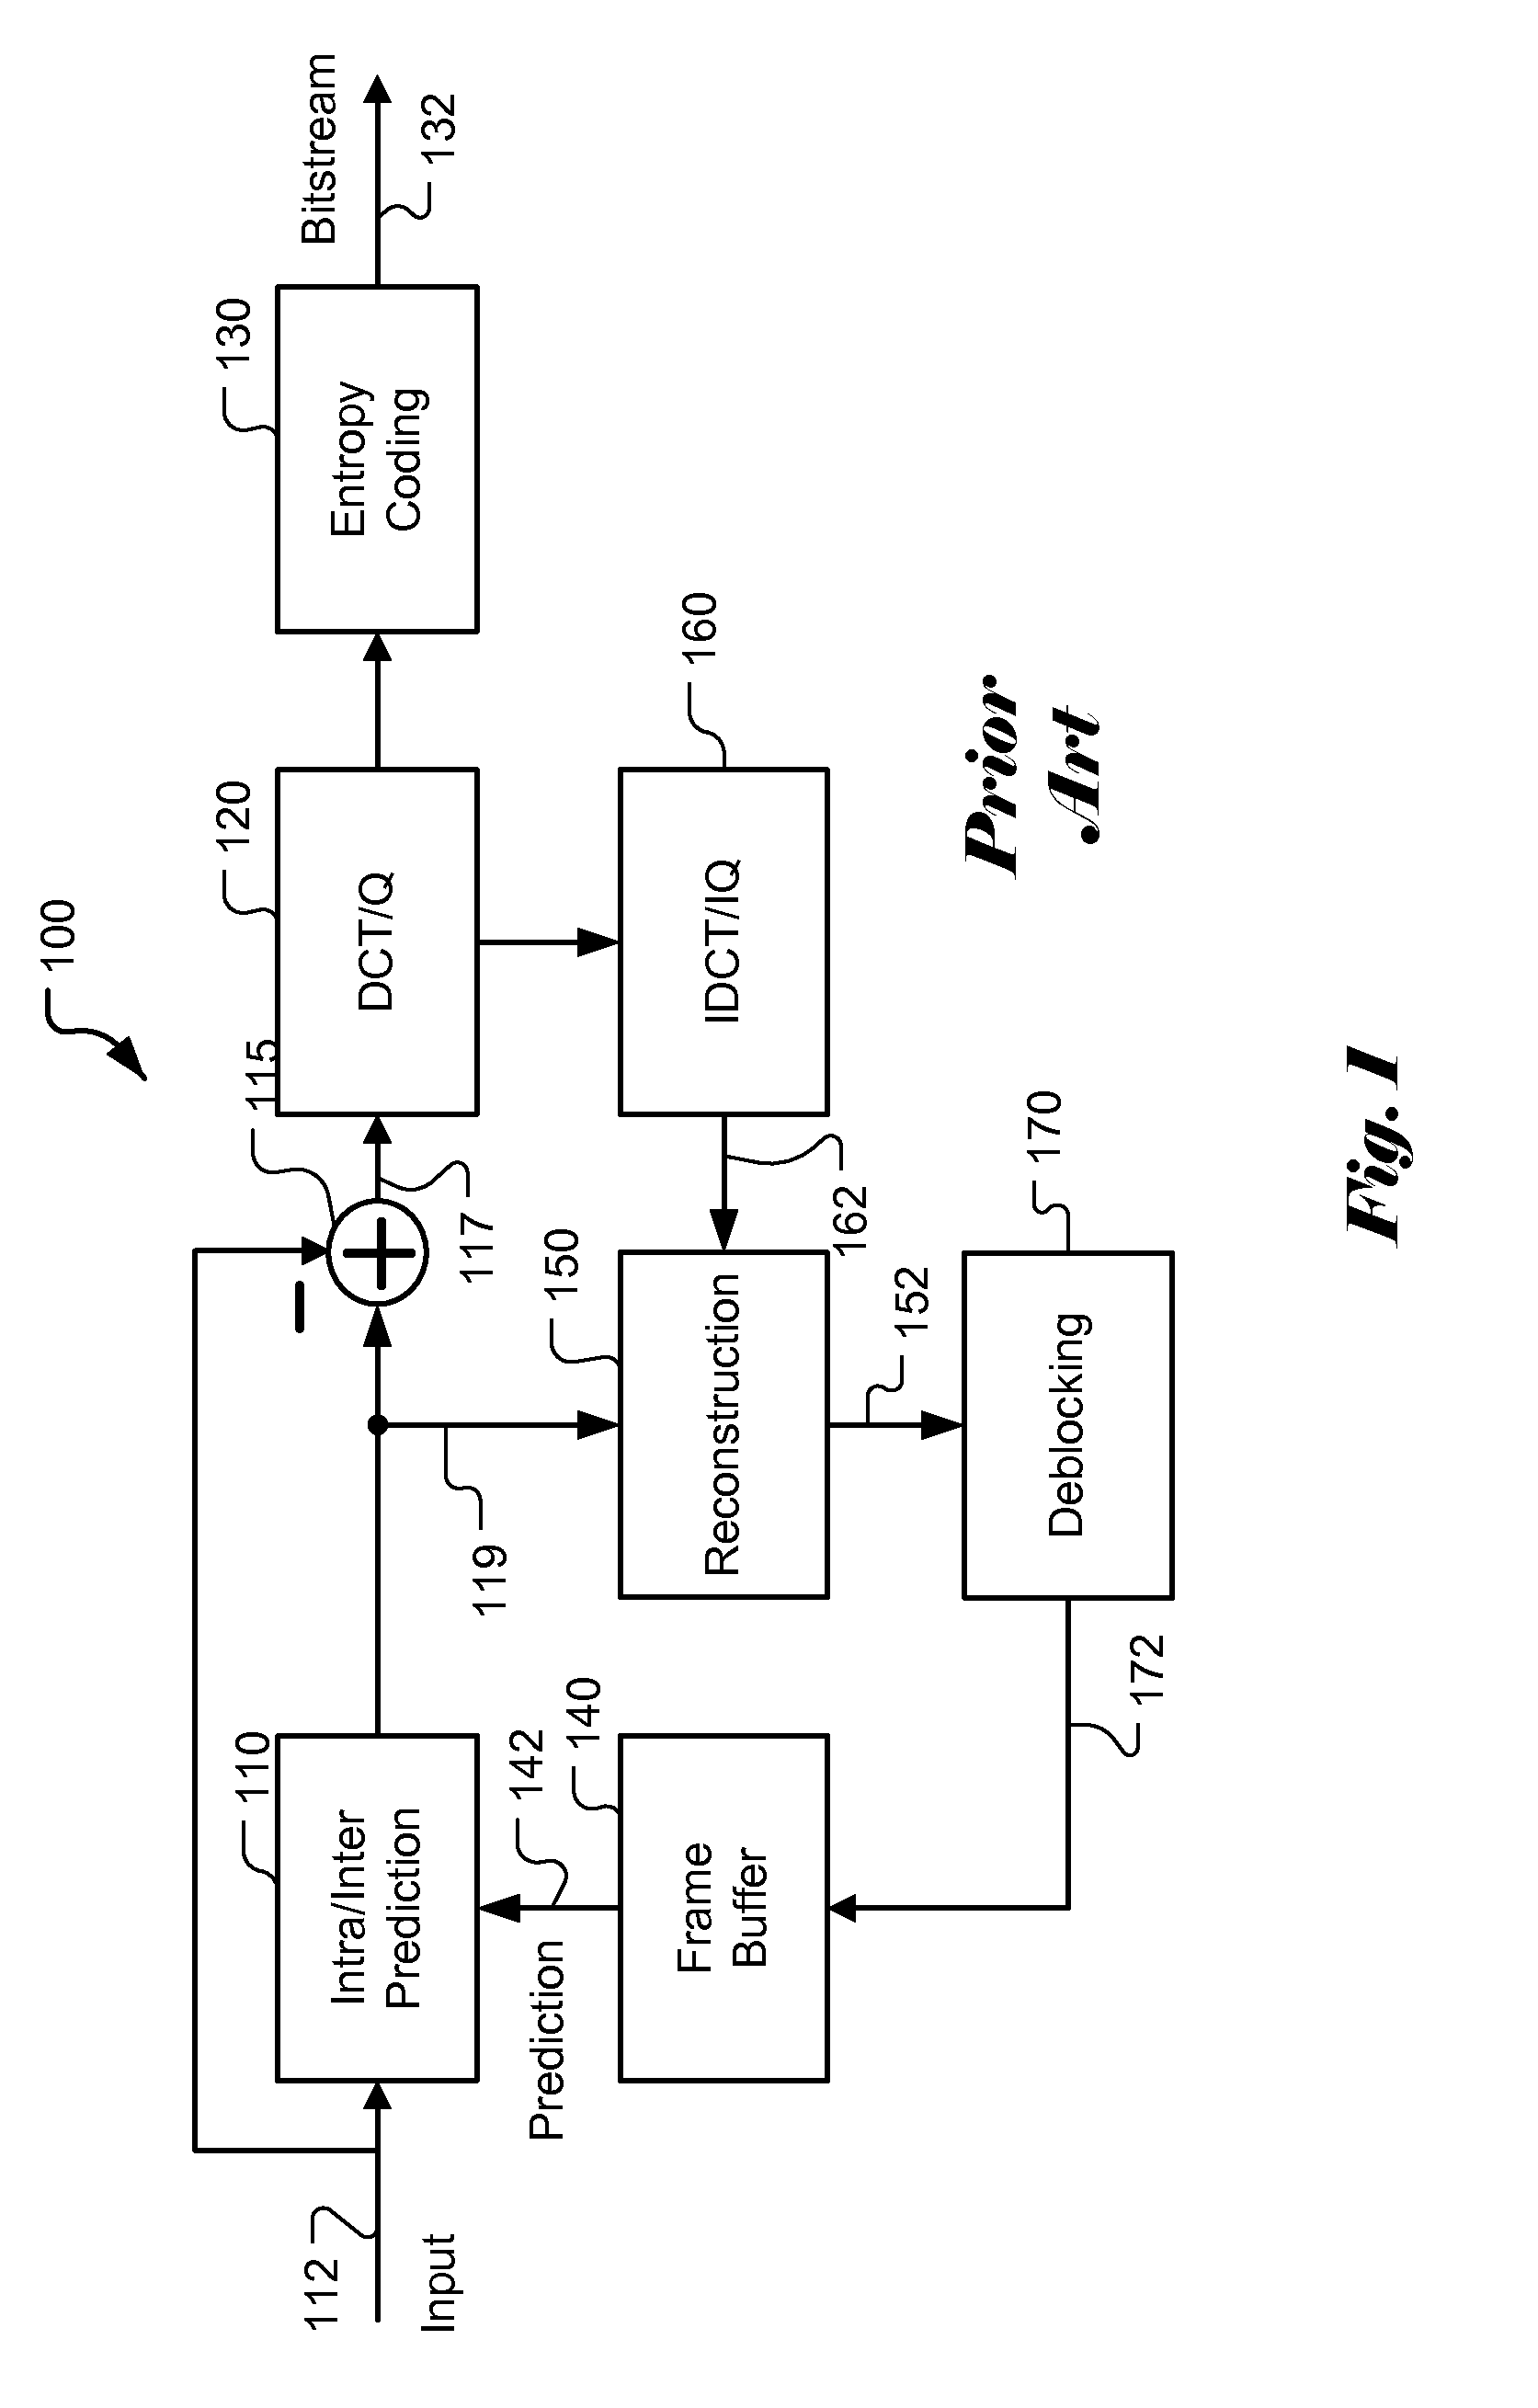 Method and Apparatus of Adaptive Loop Filtering